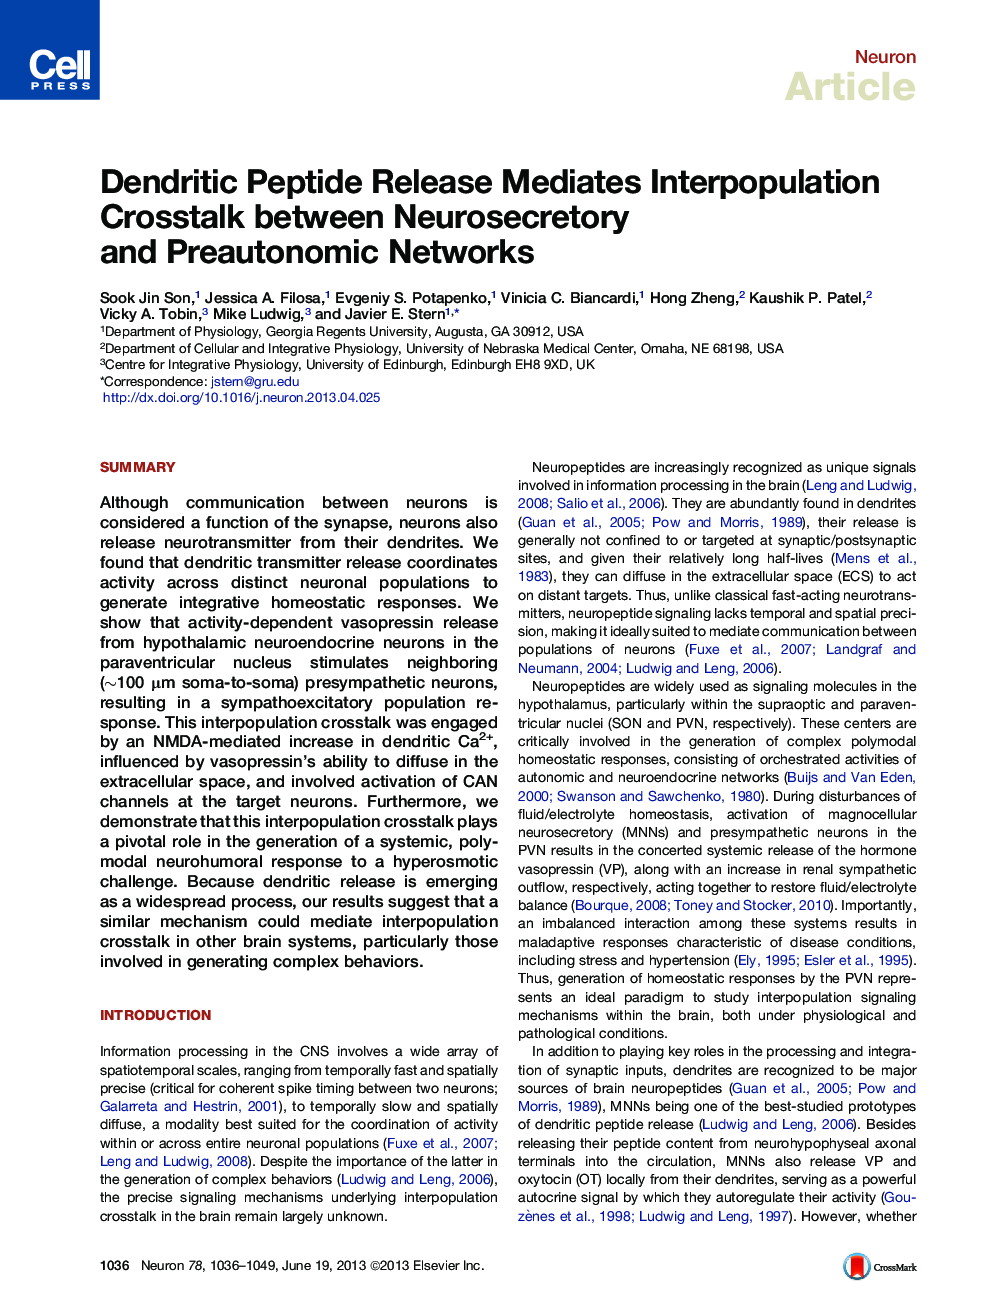 Dendritic Peptide Release Mediates Interpopulation Crosstalk between Neurosecretory and Preautonomic Networks